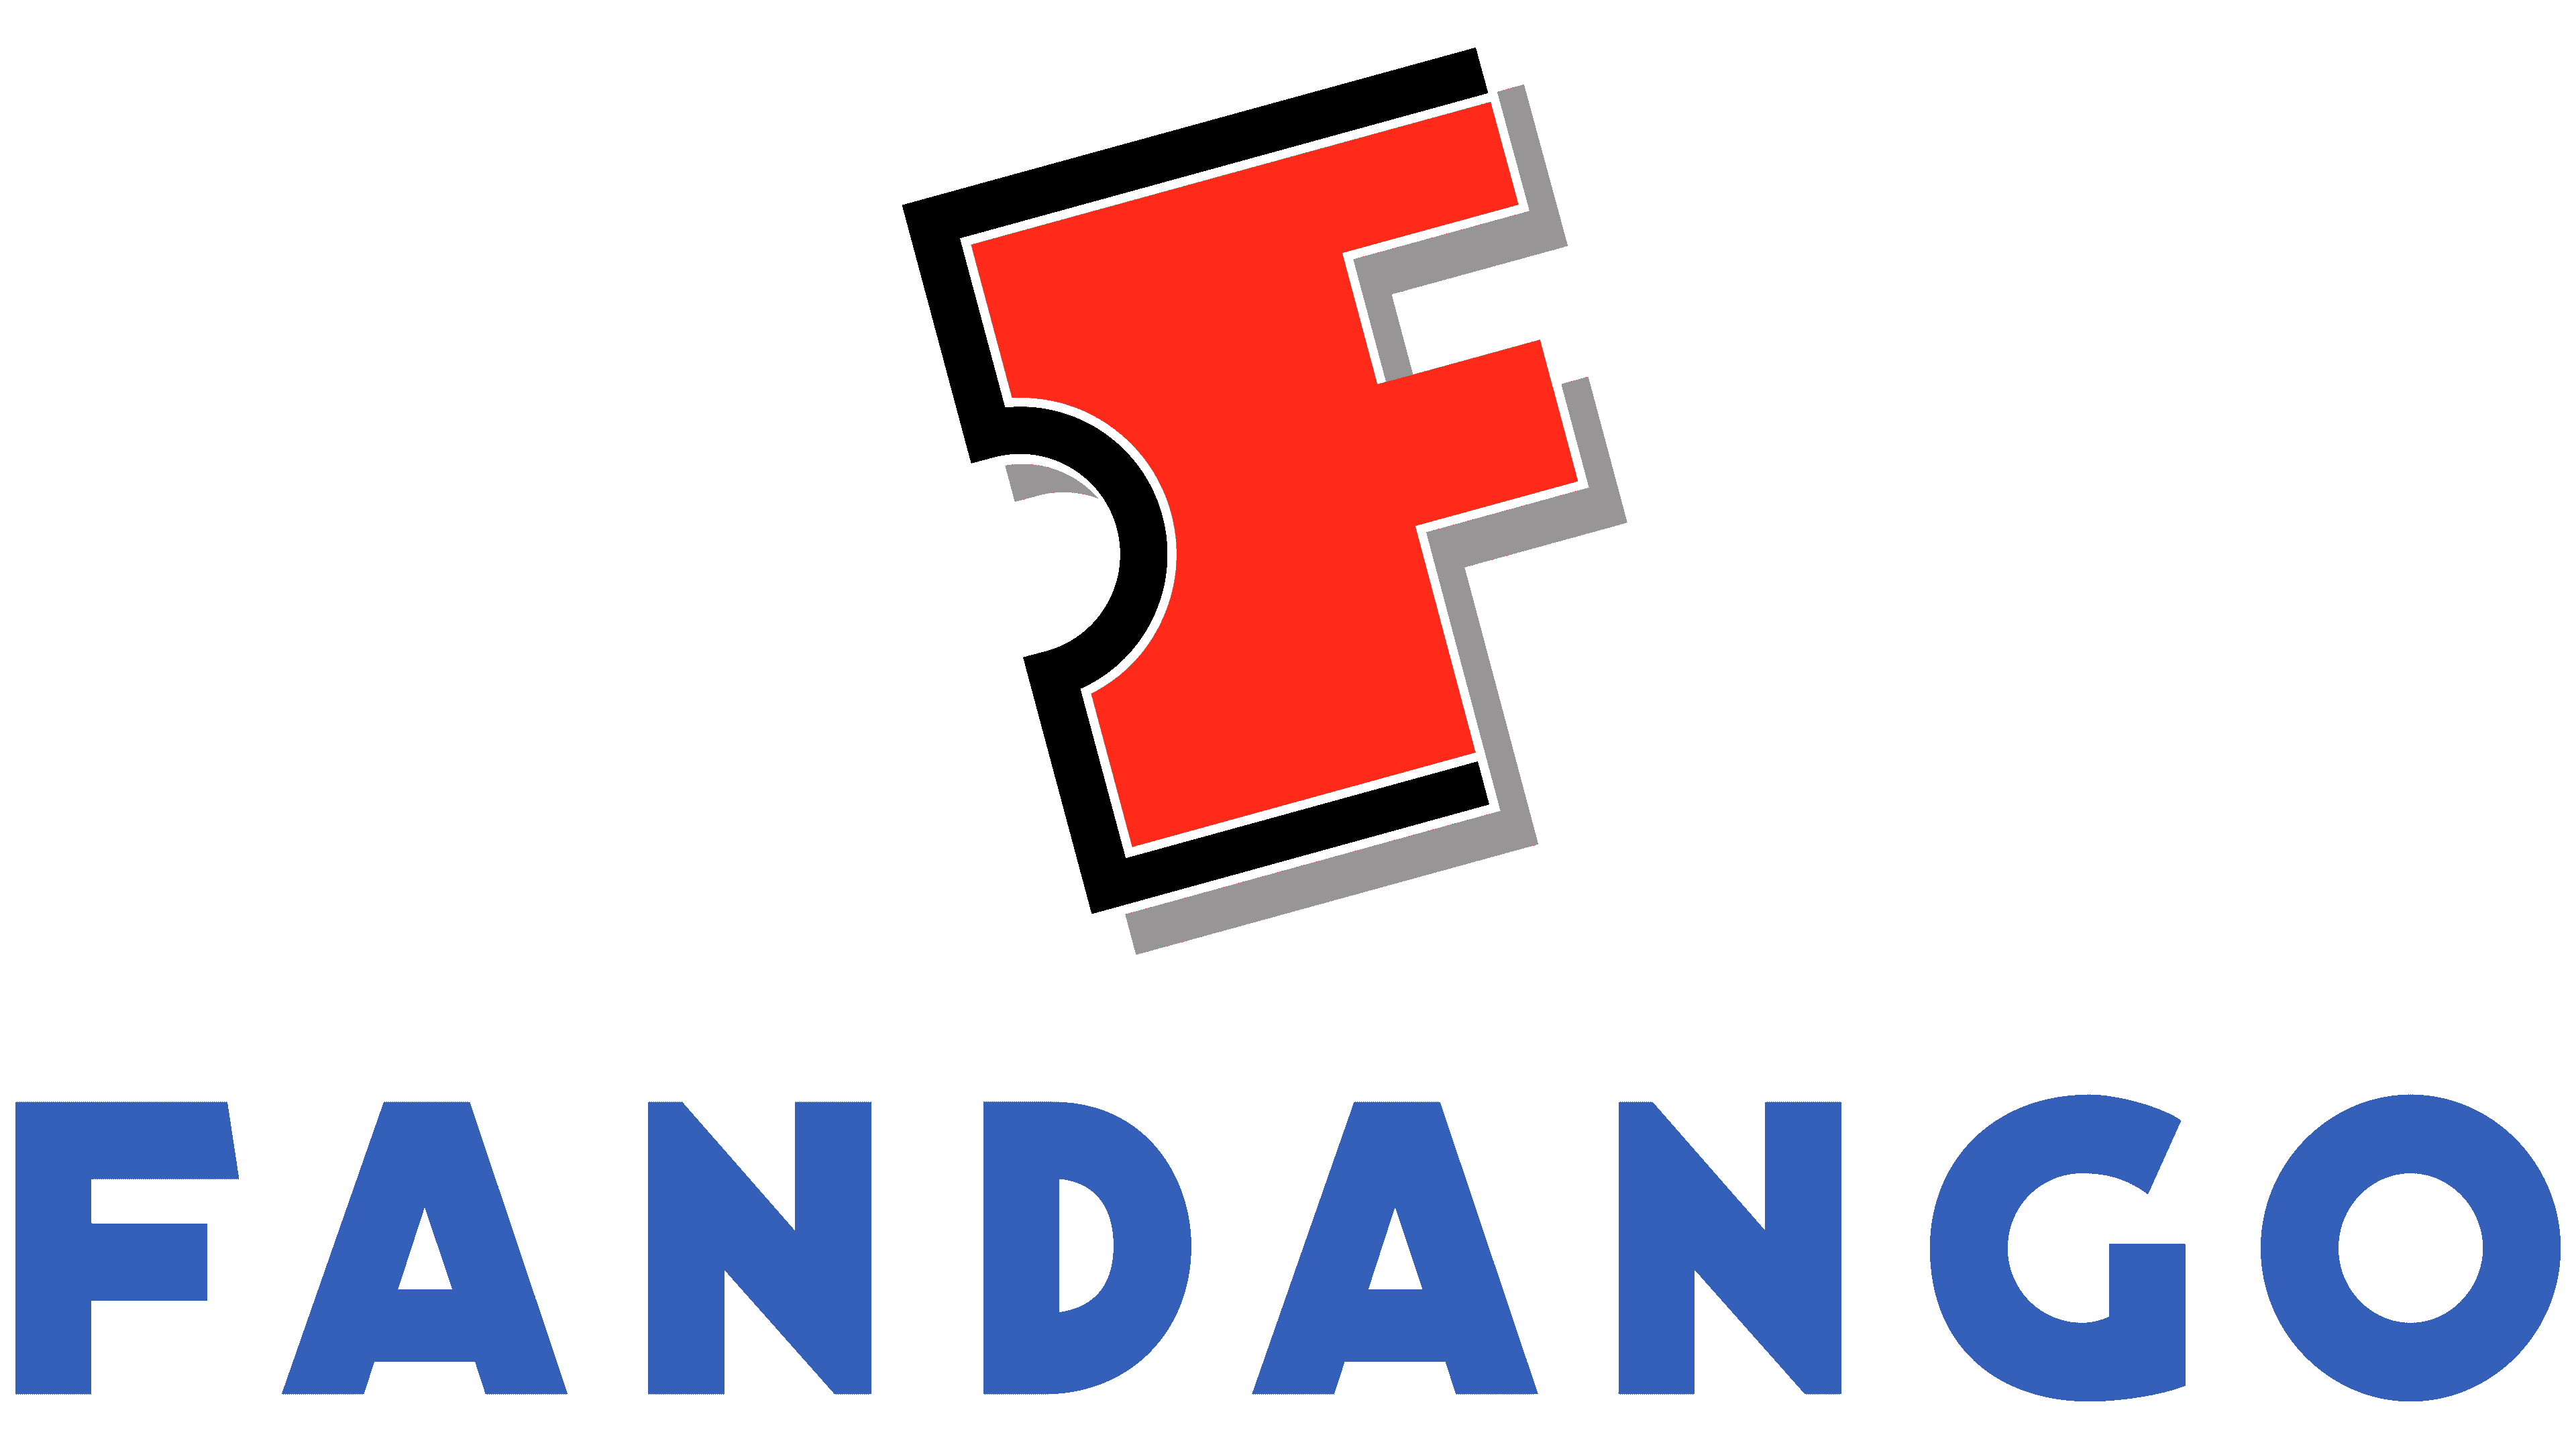 Fandango Logo, symbol, meaning, history, PNG, brand